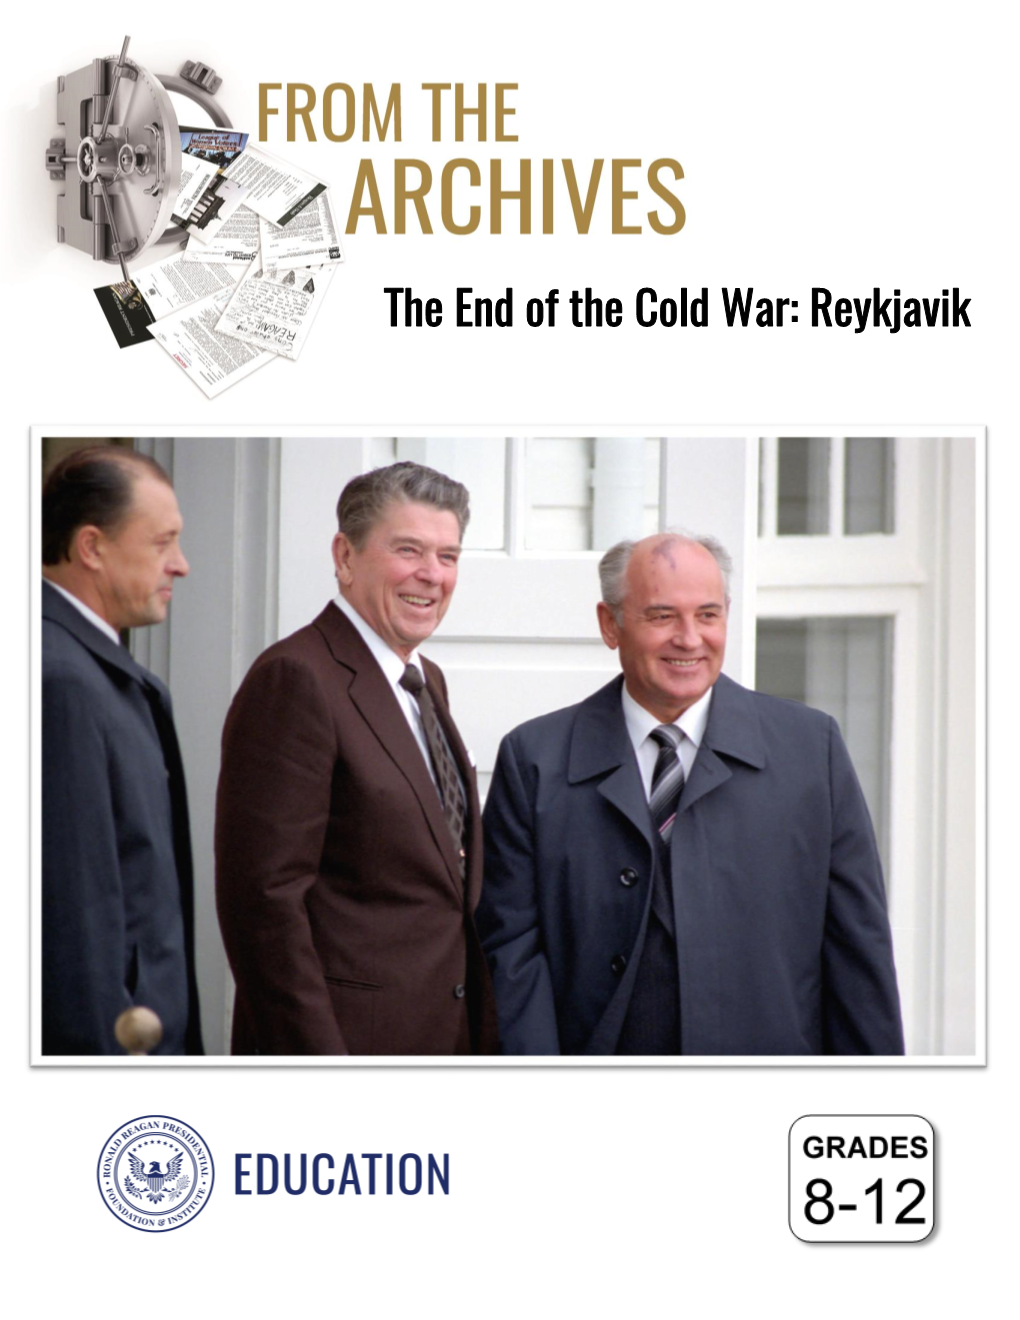 The End of the Cold War: Reykjavik